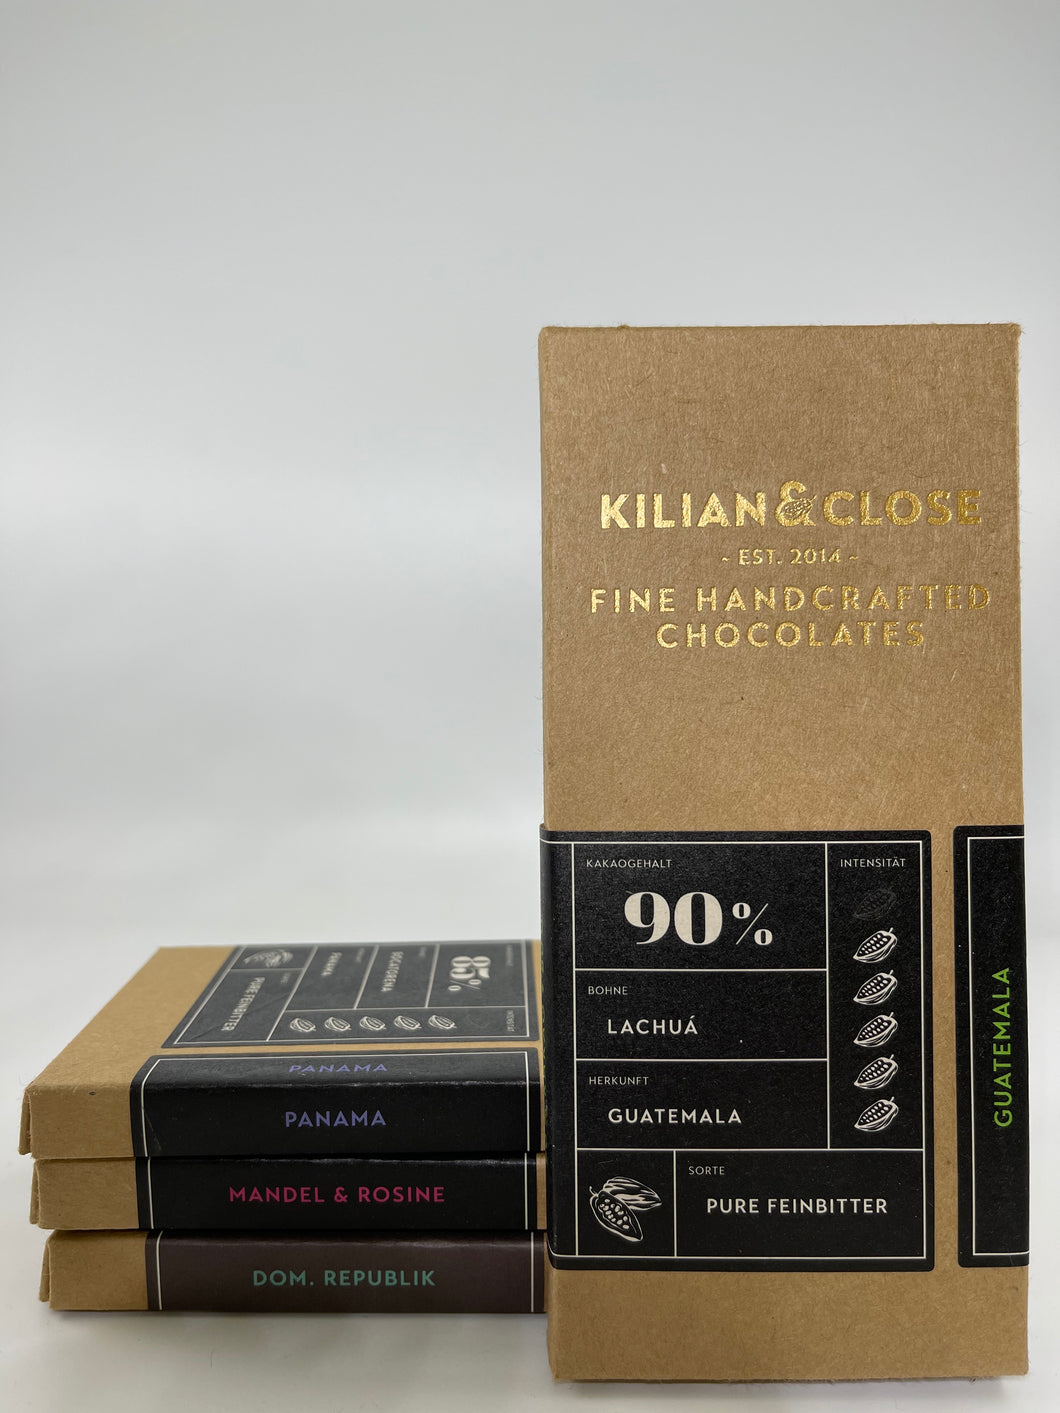 Kilian & Close - Guatemala 90% / Schokolade